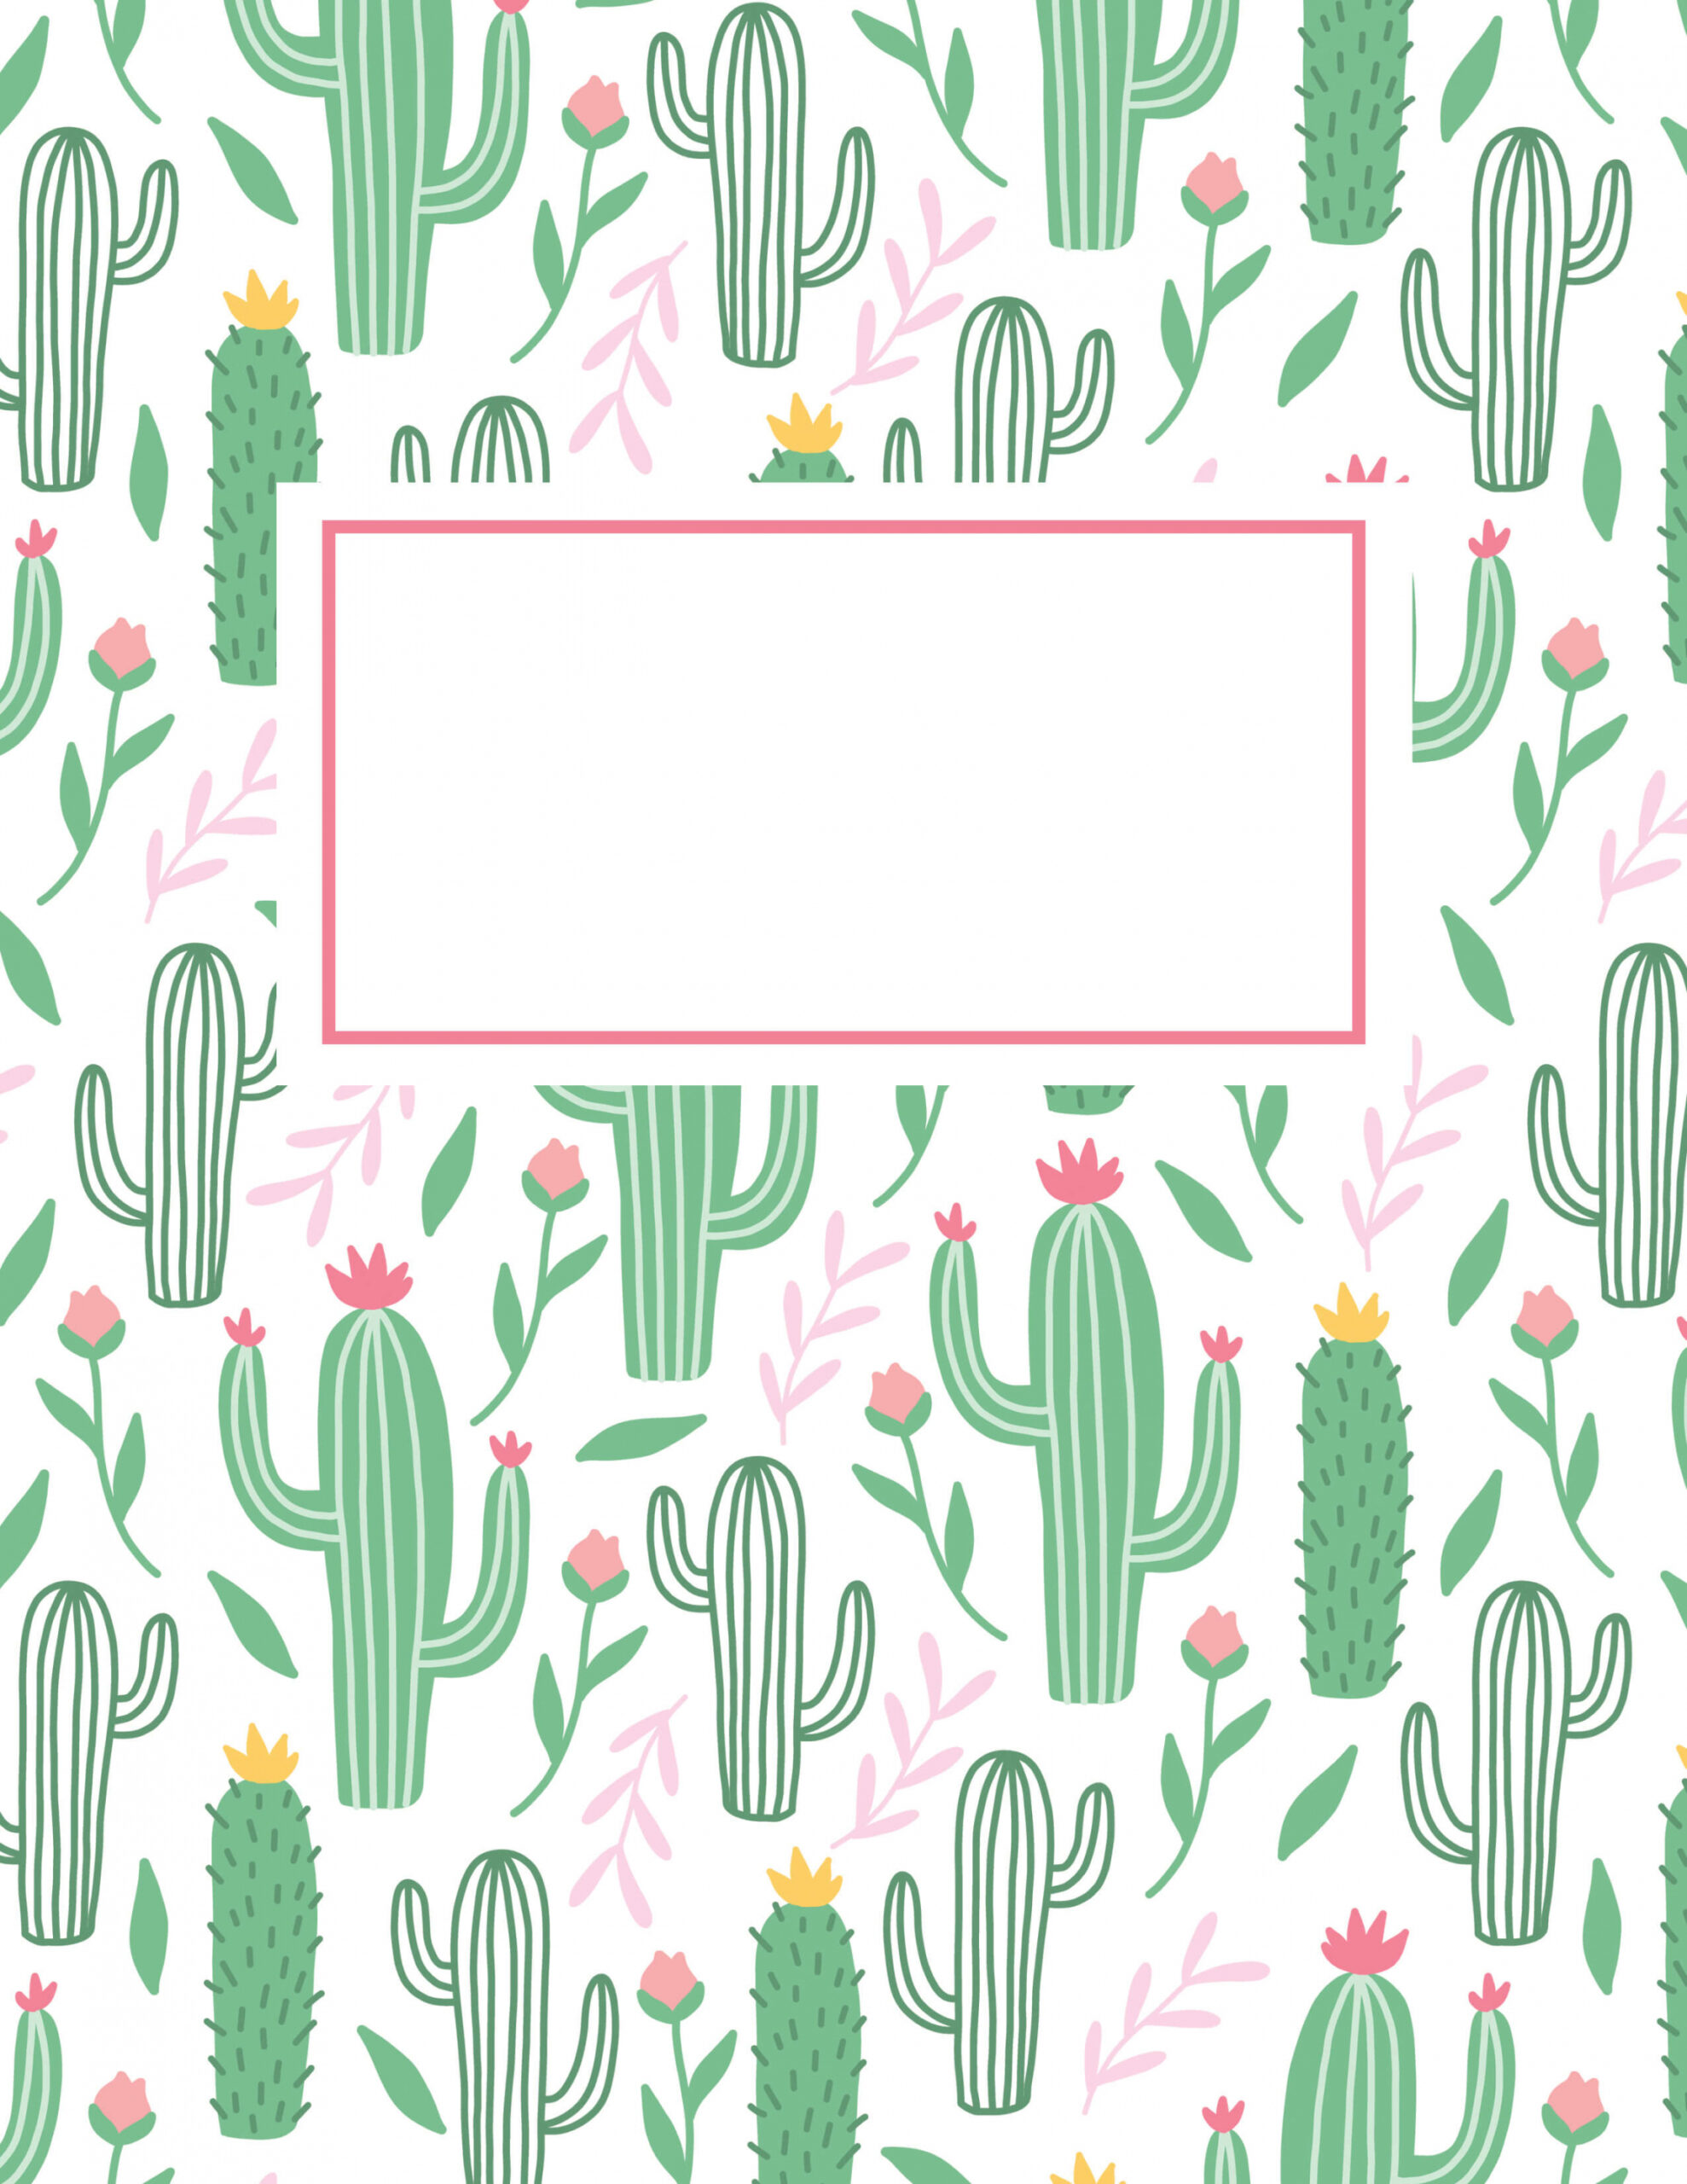 Printable Free Binder Covers - Printable - Cactus Printable Binder Cover - Chicfetti